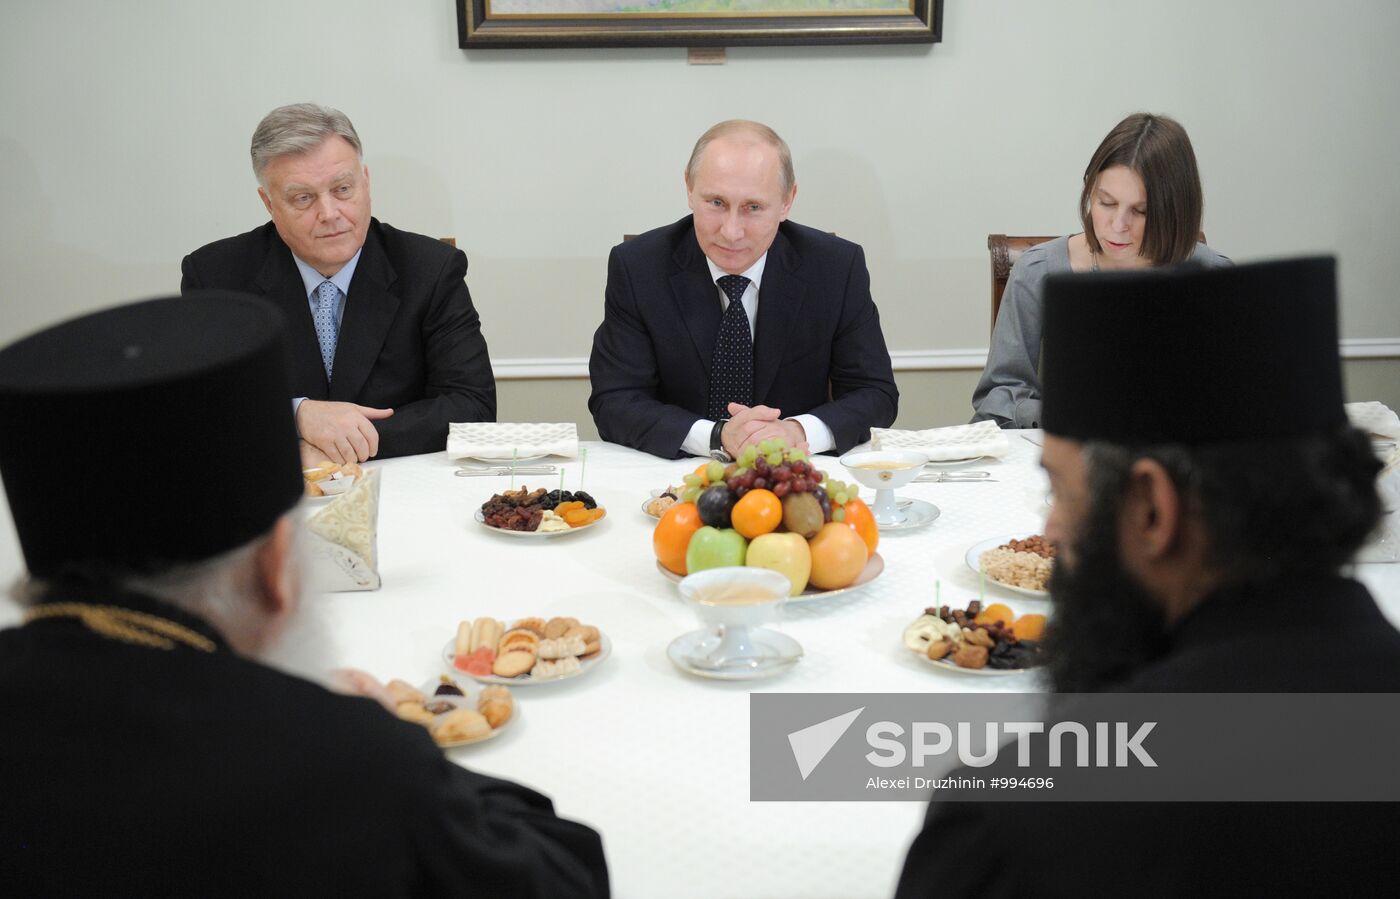 Vladimir Putin meets with Archimandrite Ephraim, Monk Nektarios